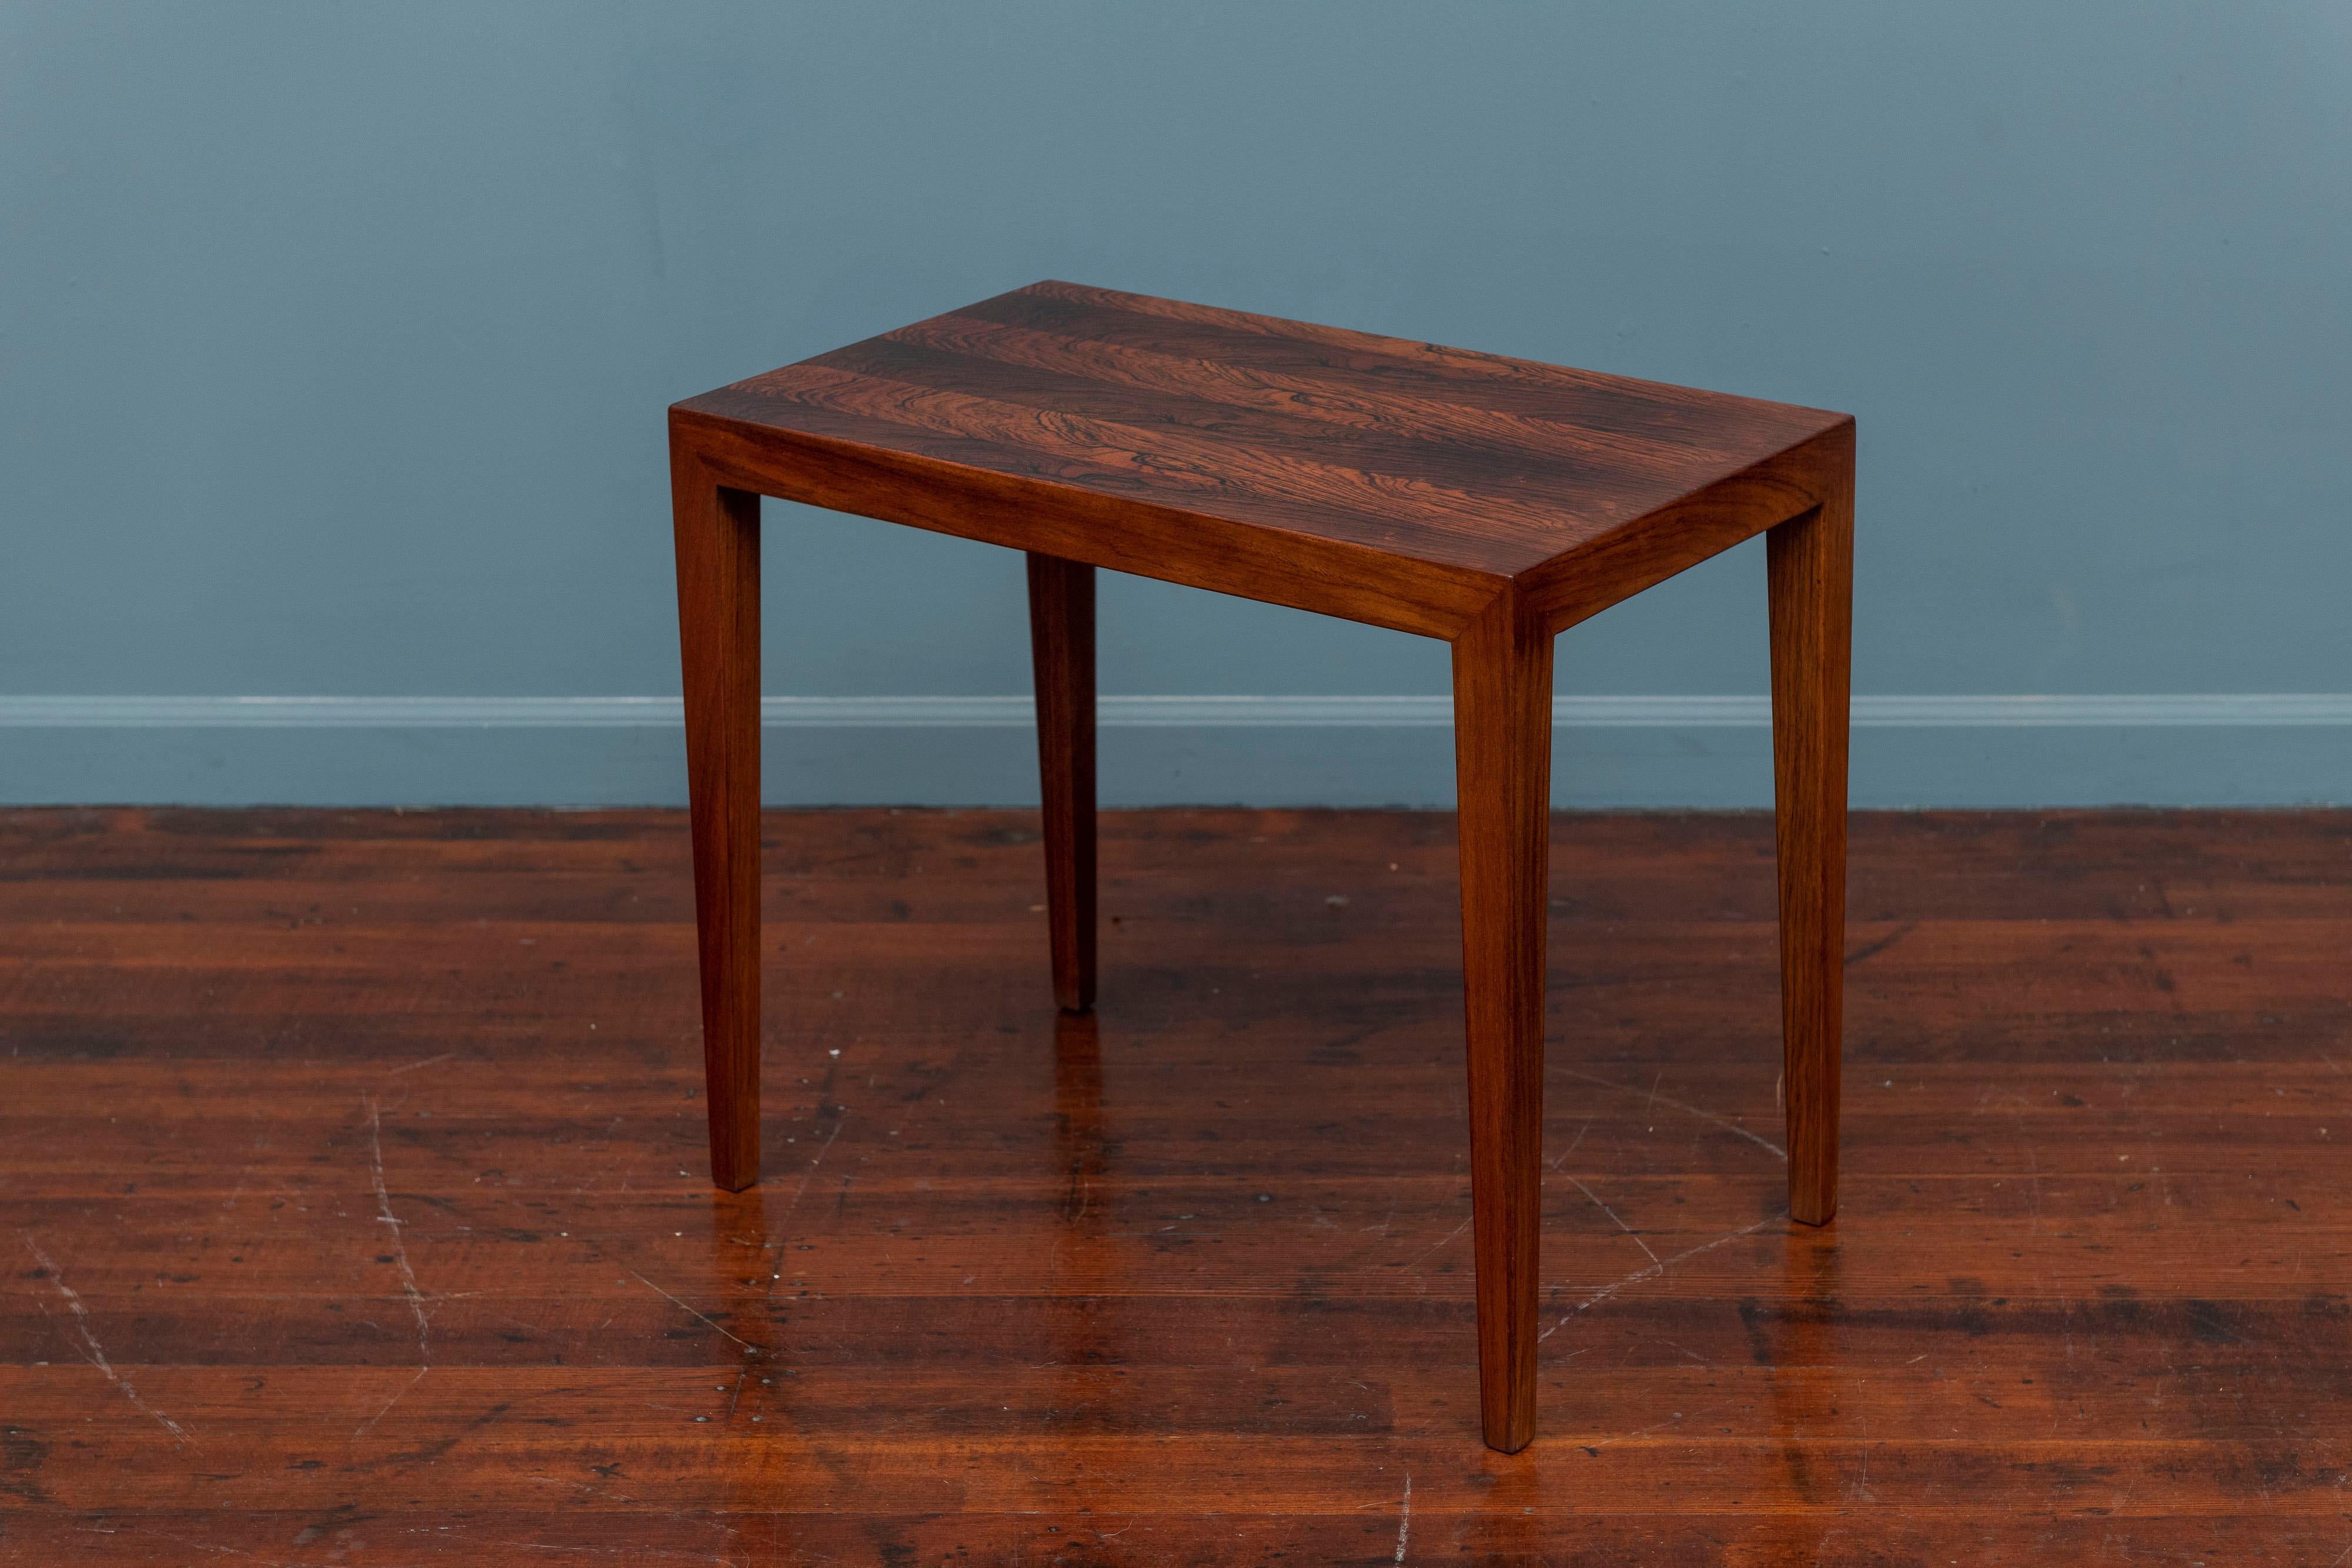 Scandinavian Modern Svend Langkilde Rosewood Side Table For Sale